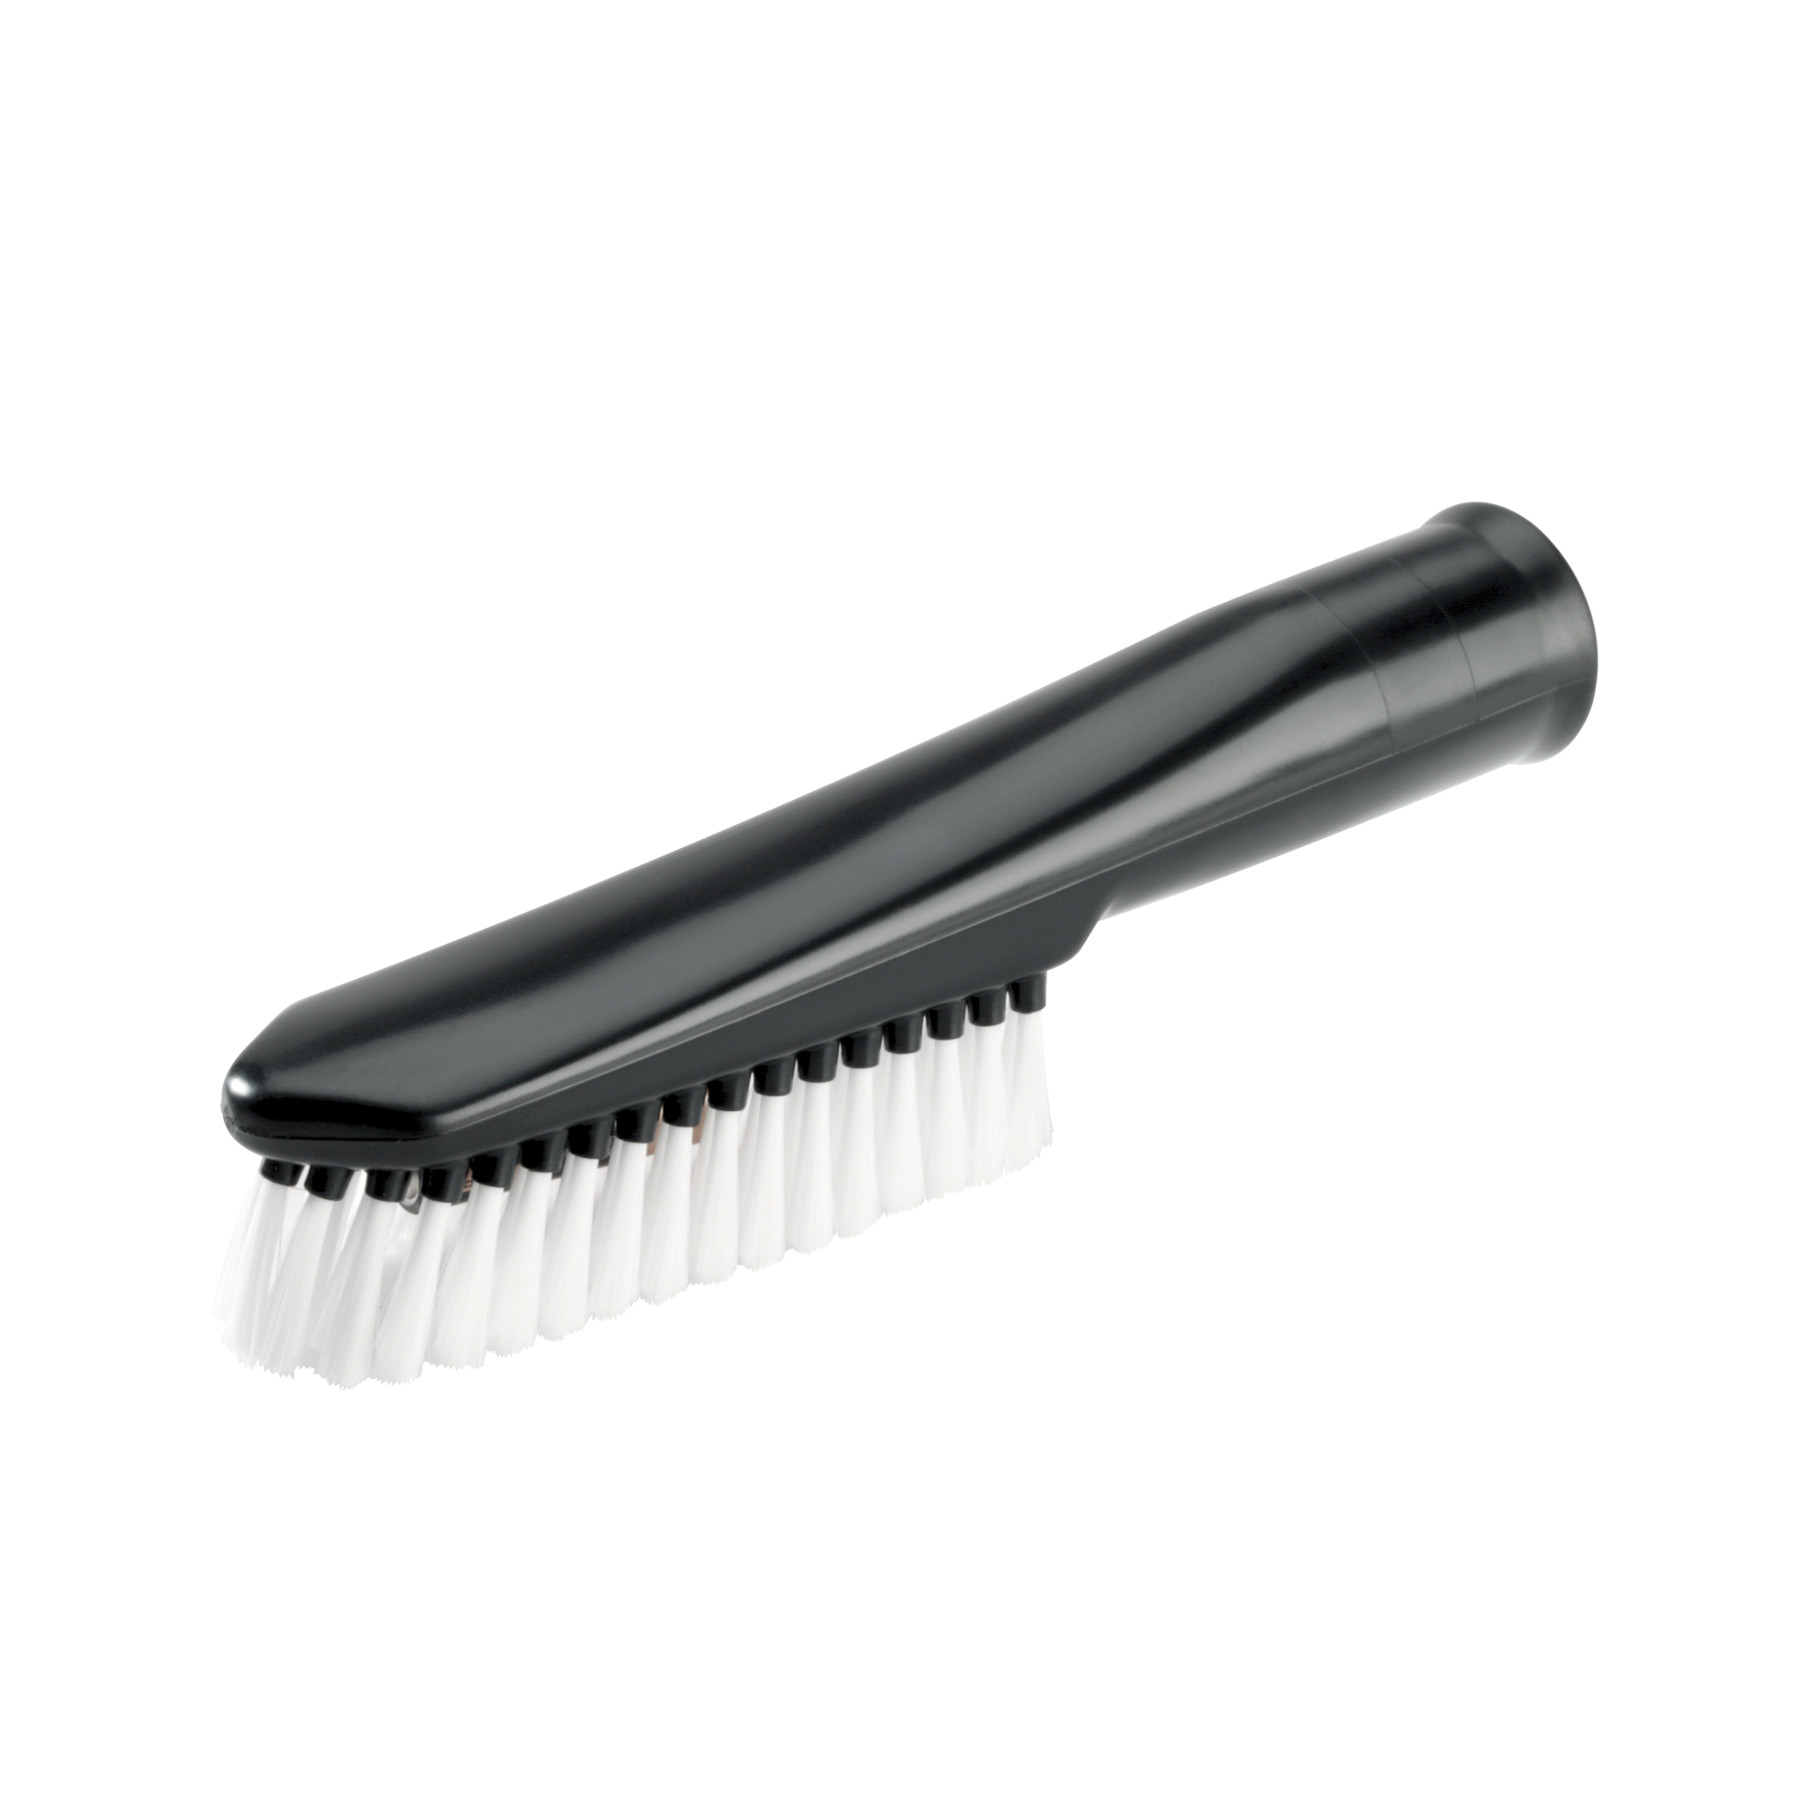 NuTone® Central Vacuum Universal Dusting Brush, Black